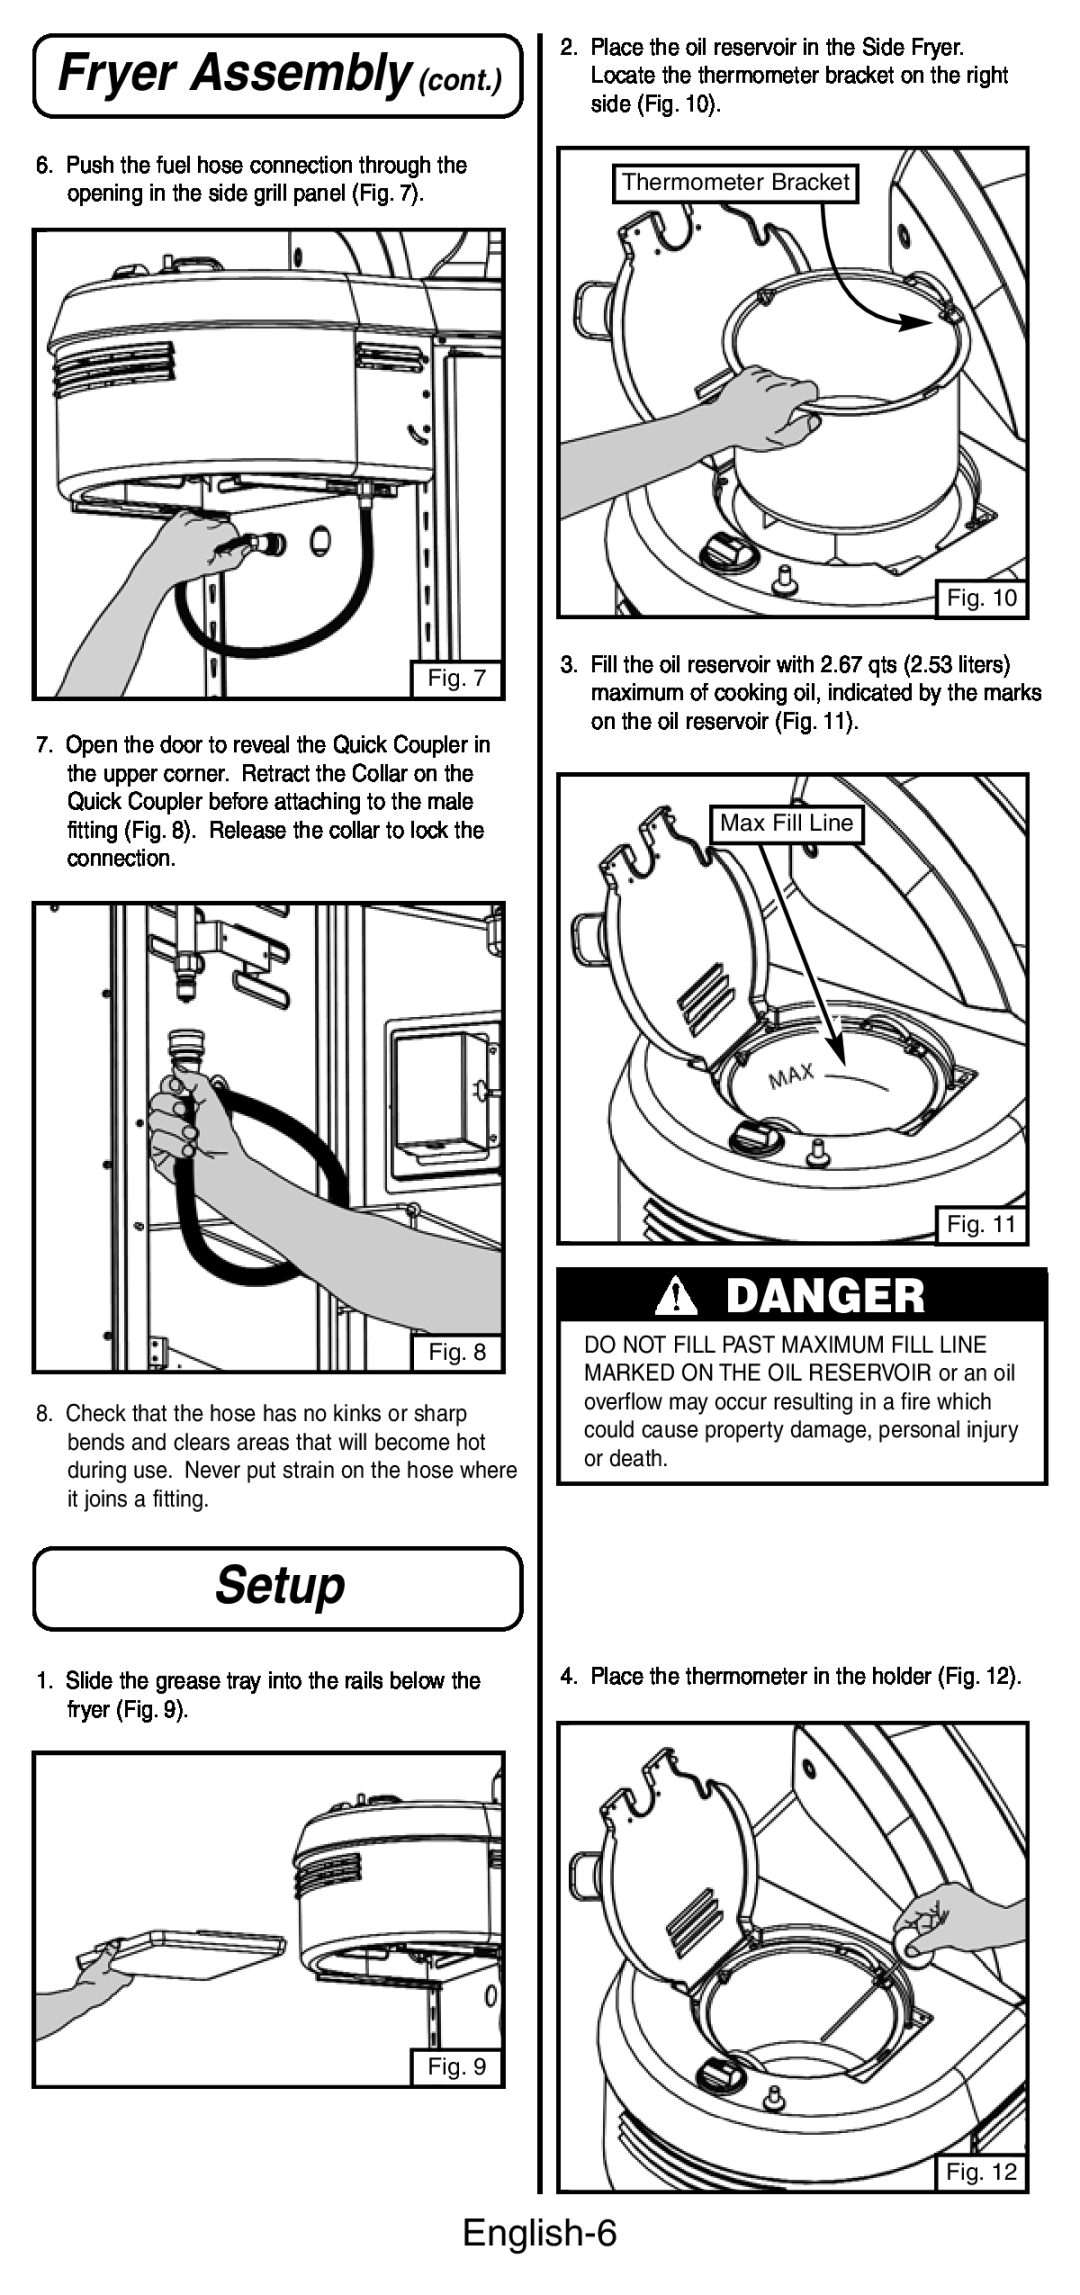 Coleman 9994 instruction manual Setup, Fryer Assembly cont, Danger, English-6 